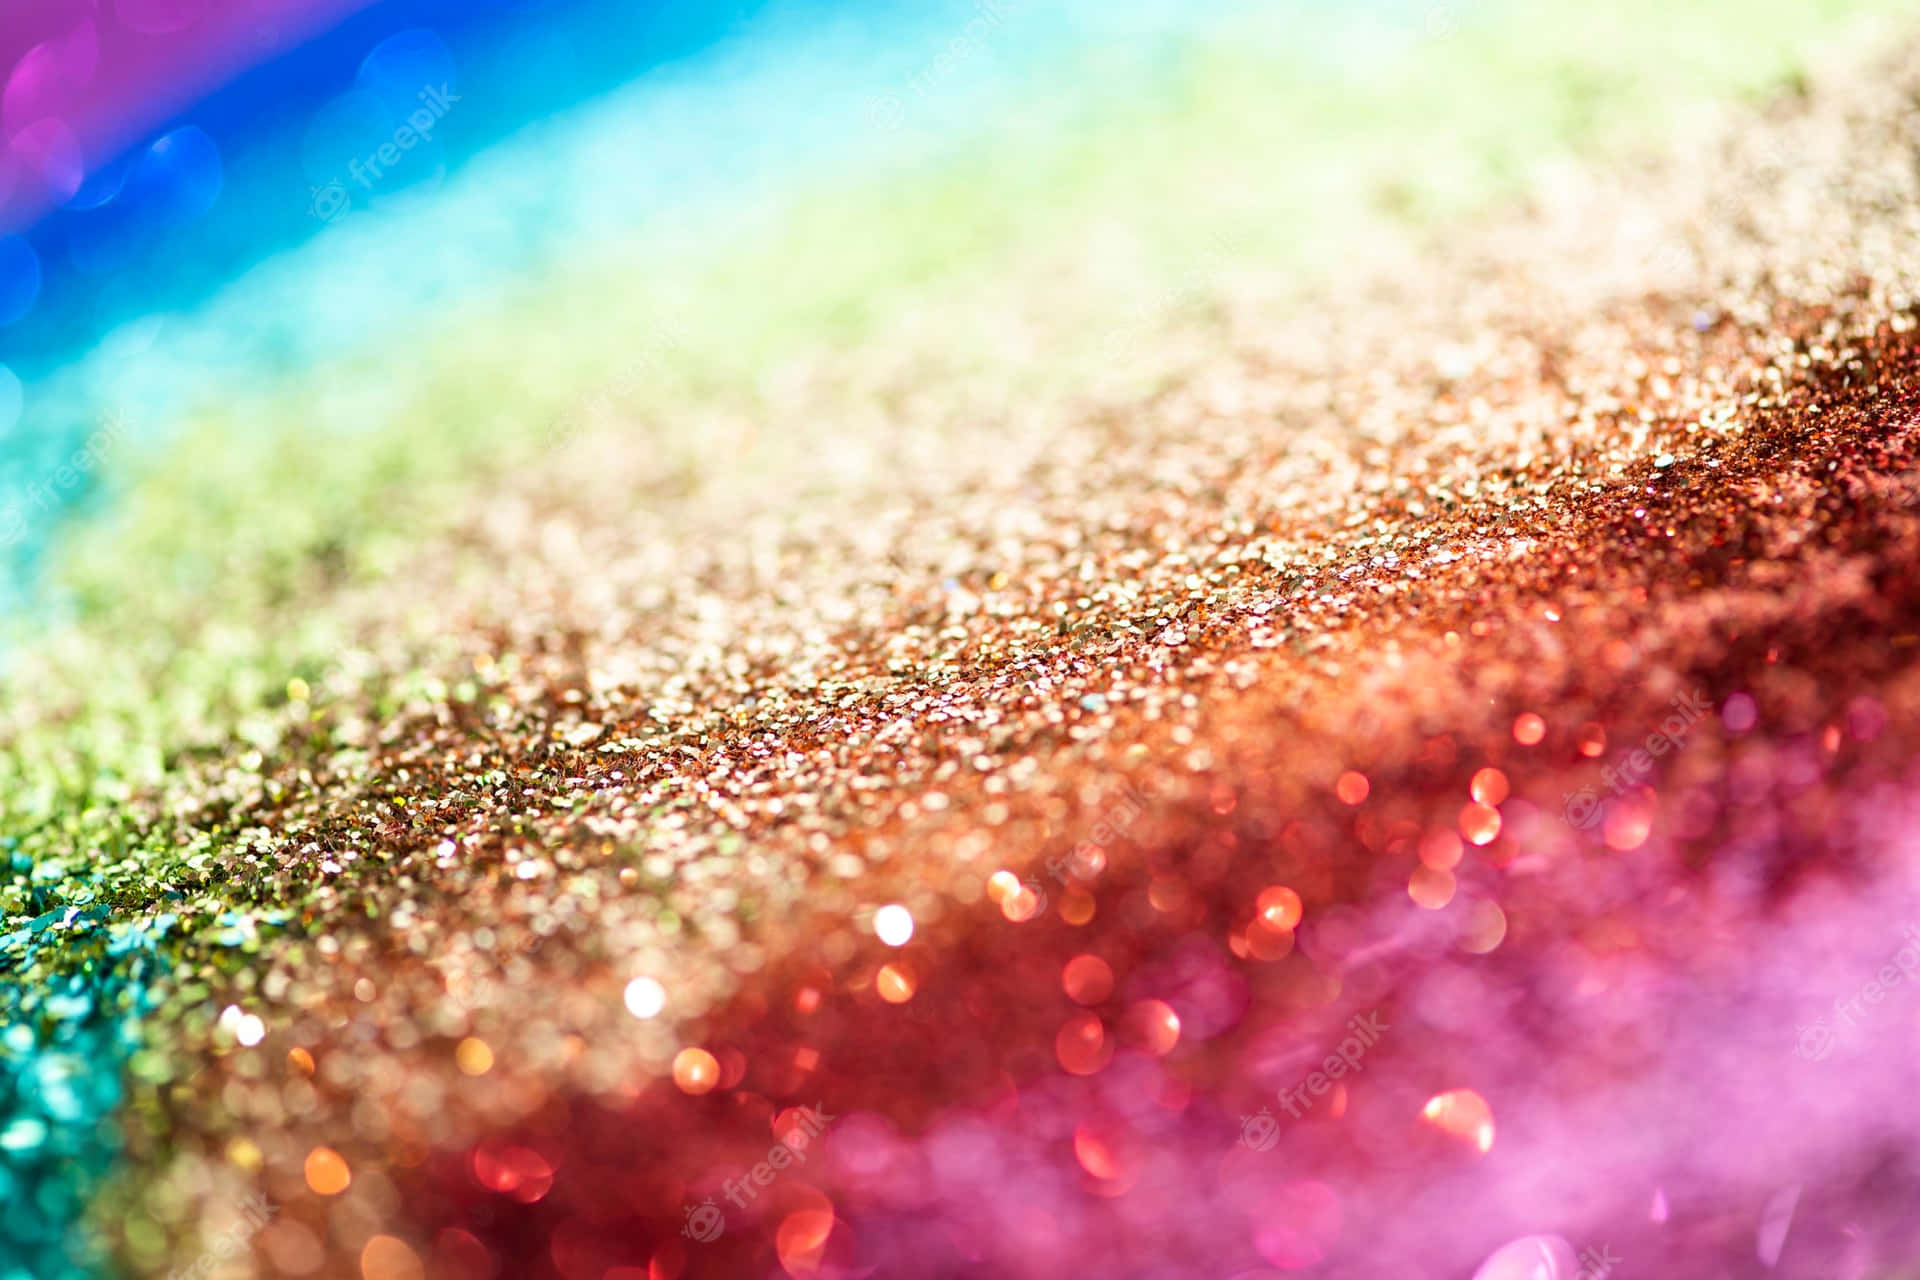 Rainbow Glitter Wallpaper